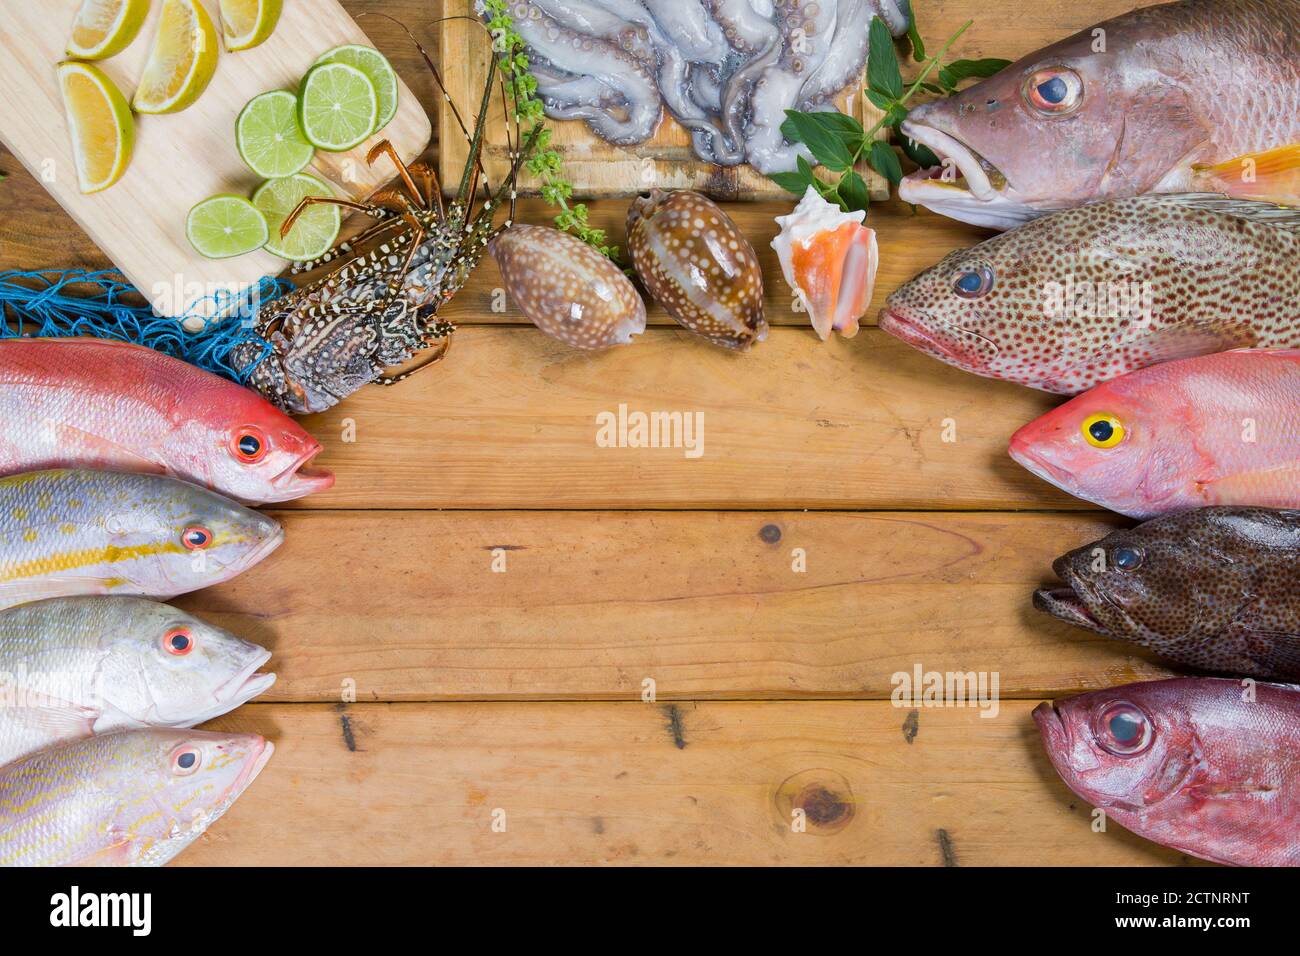 Caribe pescado fresco mariscos en vieja mesa de madera. Vista superior. Primer plano. Foto de stock